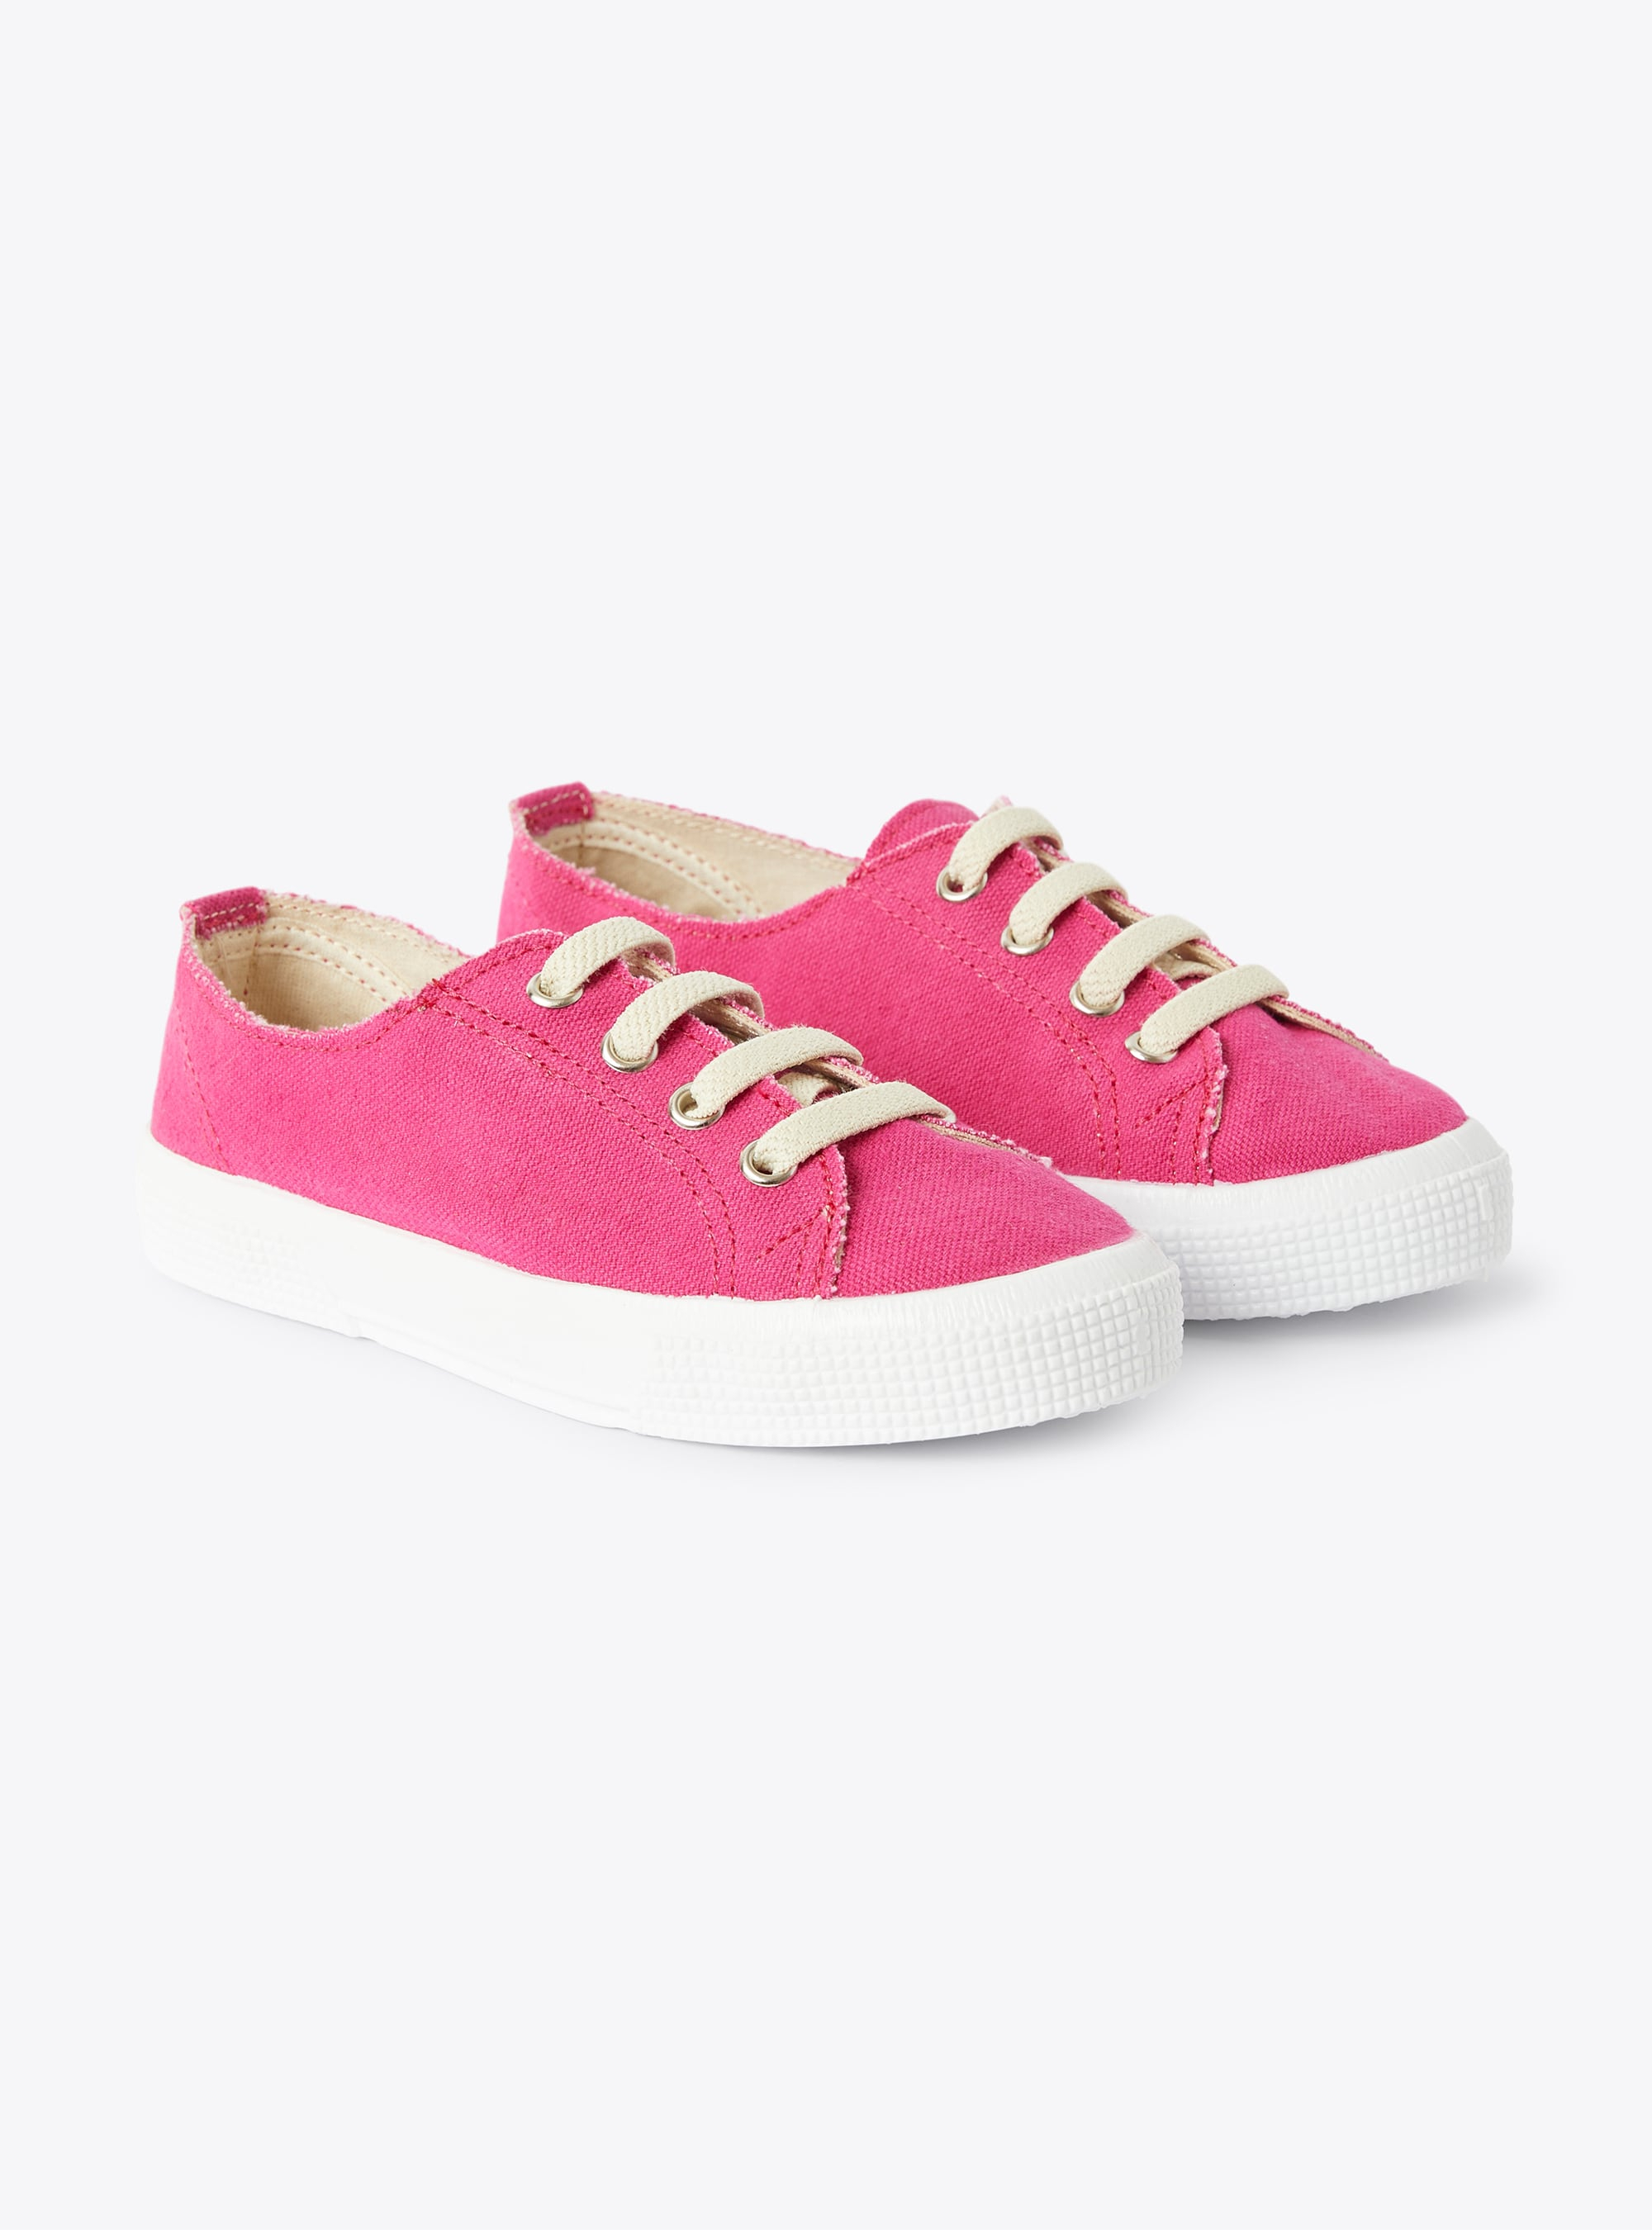 Pinkfarbene Sneakers aus Canvas - Schuhe - Il Gufo